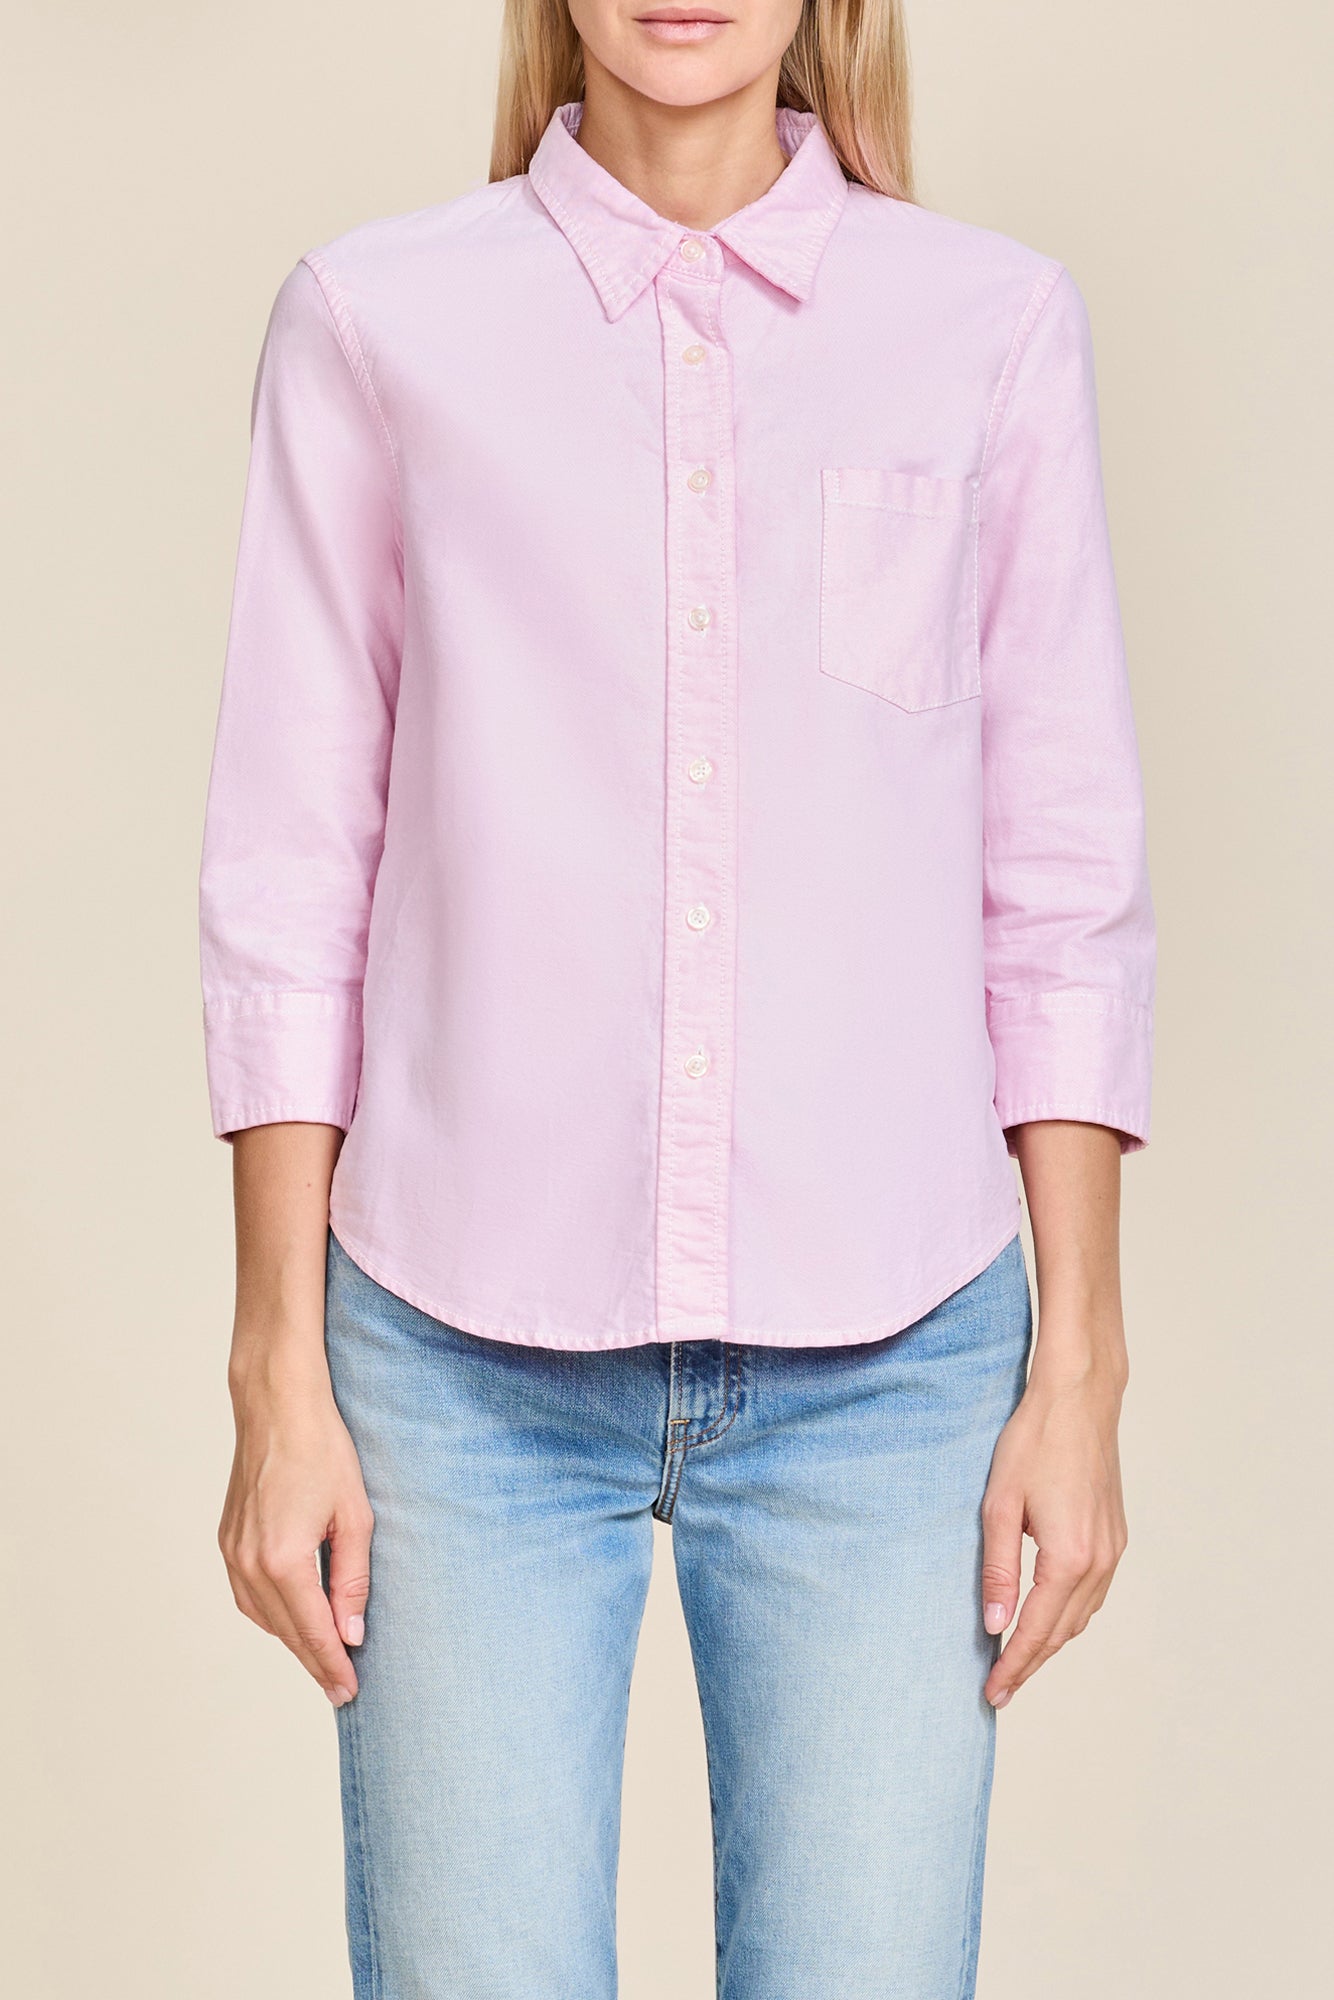 Adrienne Shrunken Shirt - Pink